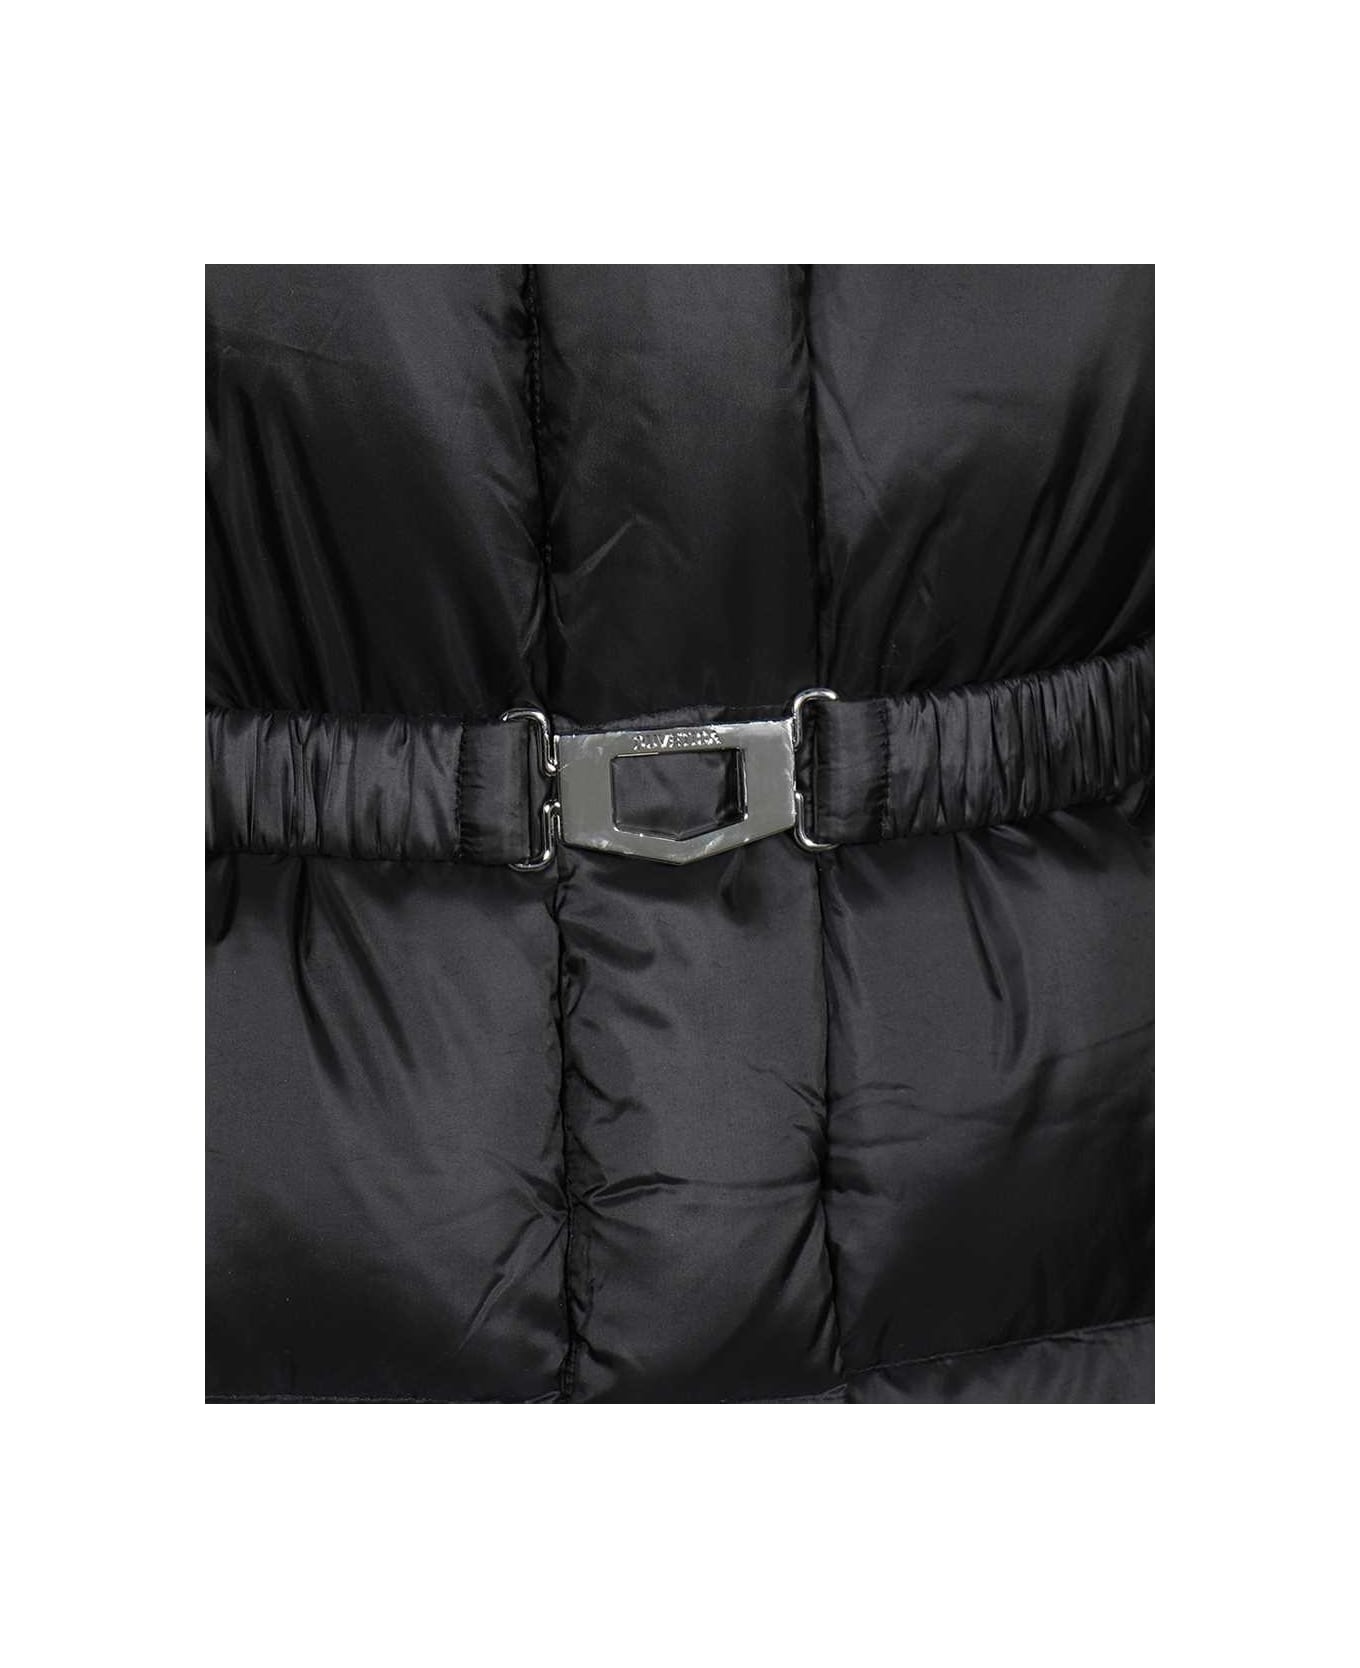 Duvetica Belted Hooded Long Down Jacket - black コート